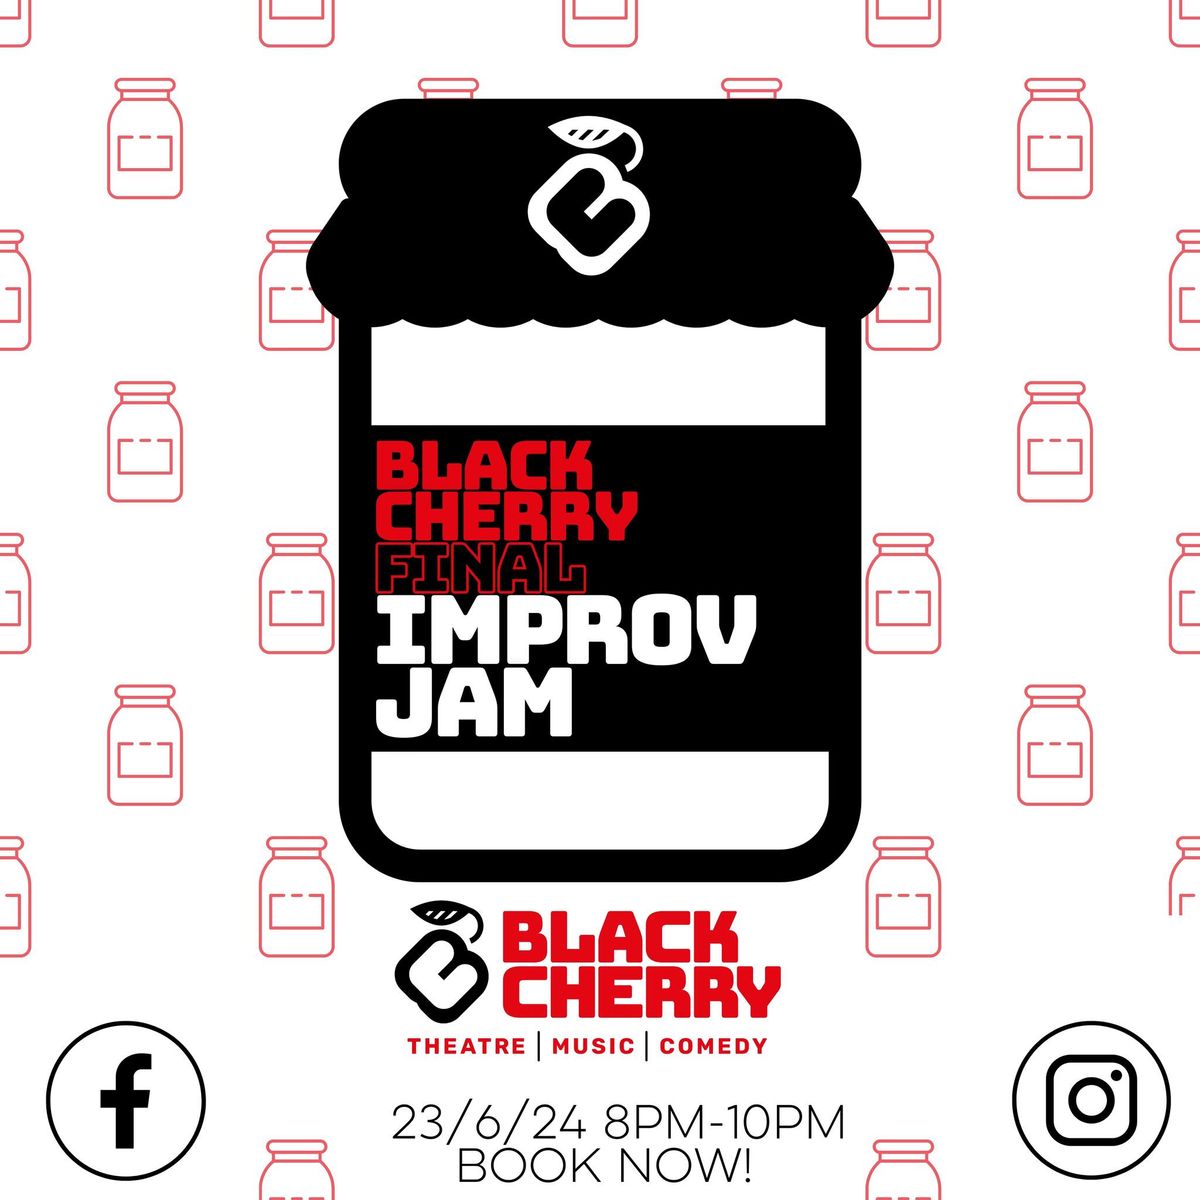 Black Cherry Final Improv Jam!